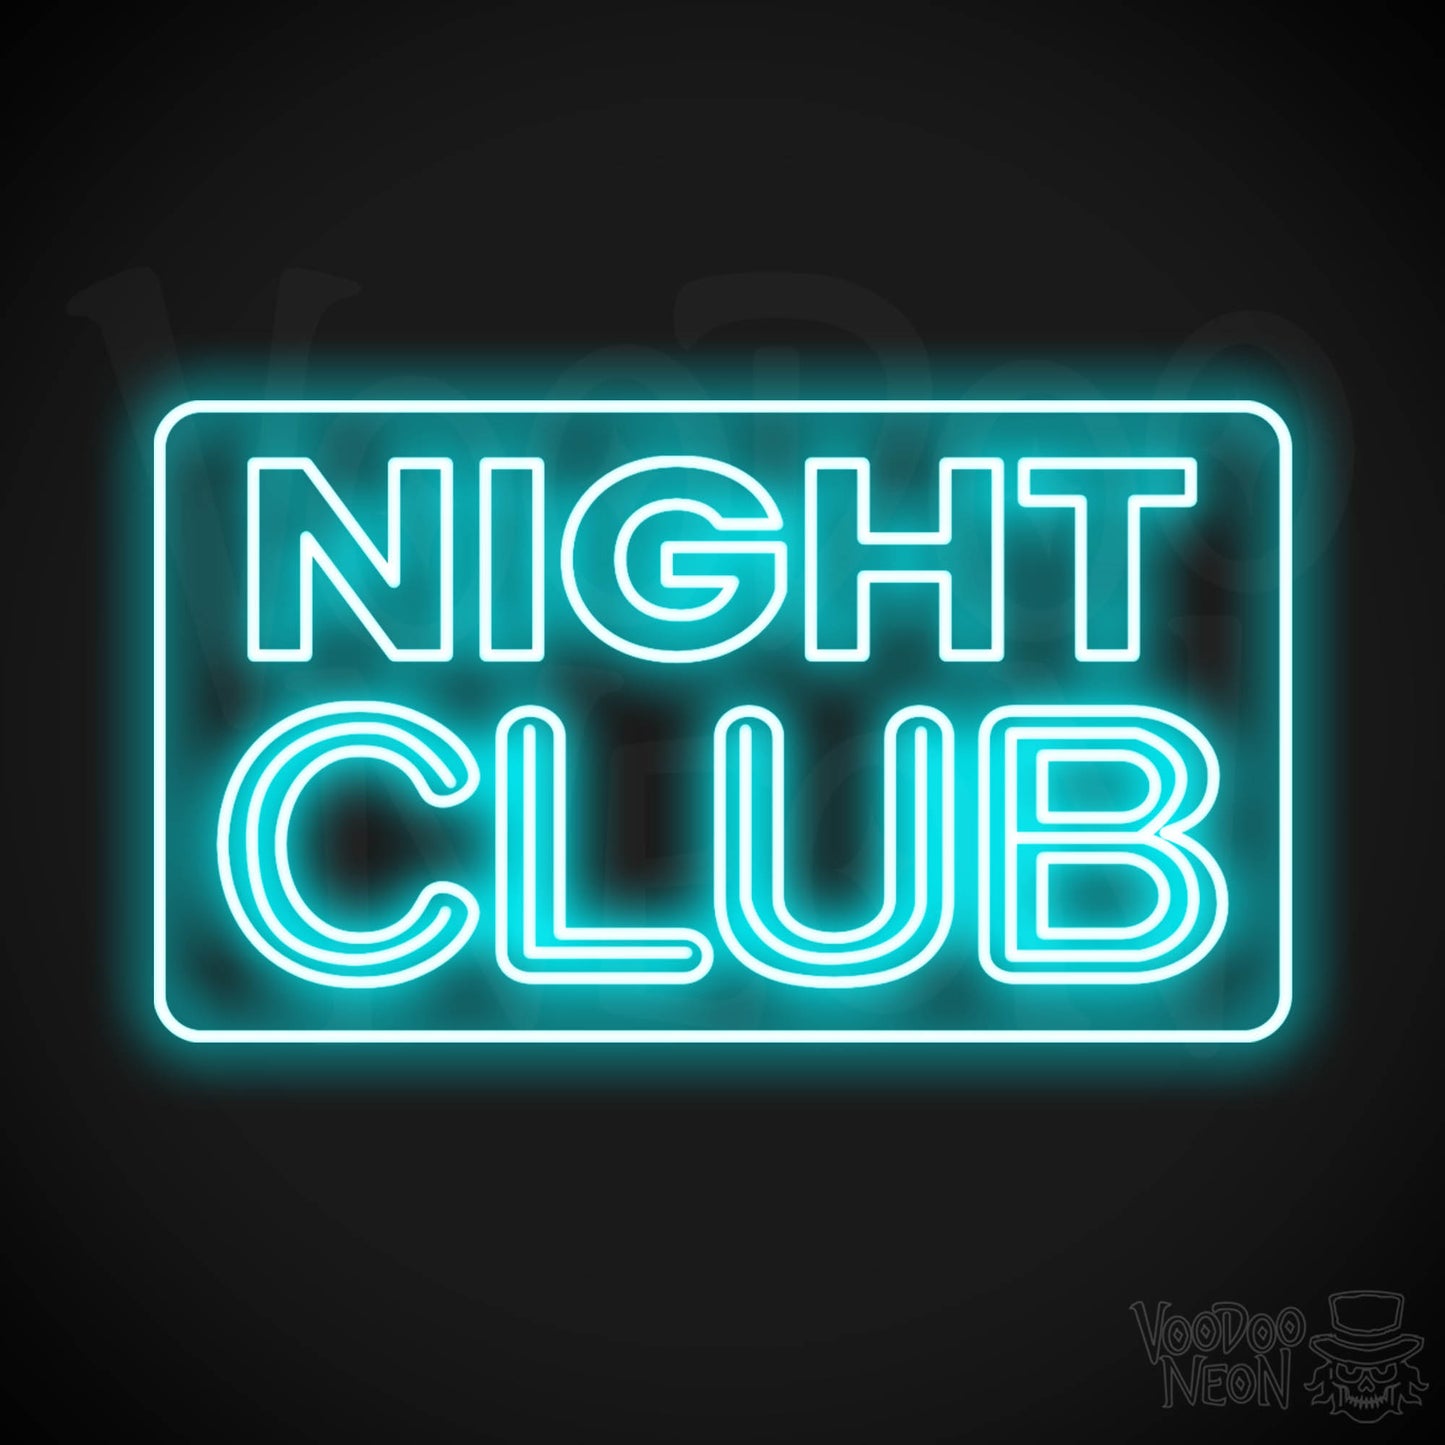 Night Club LED Neon - Ice Blue